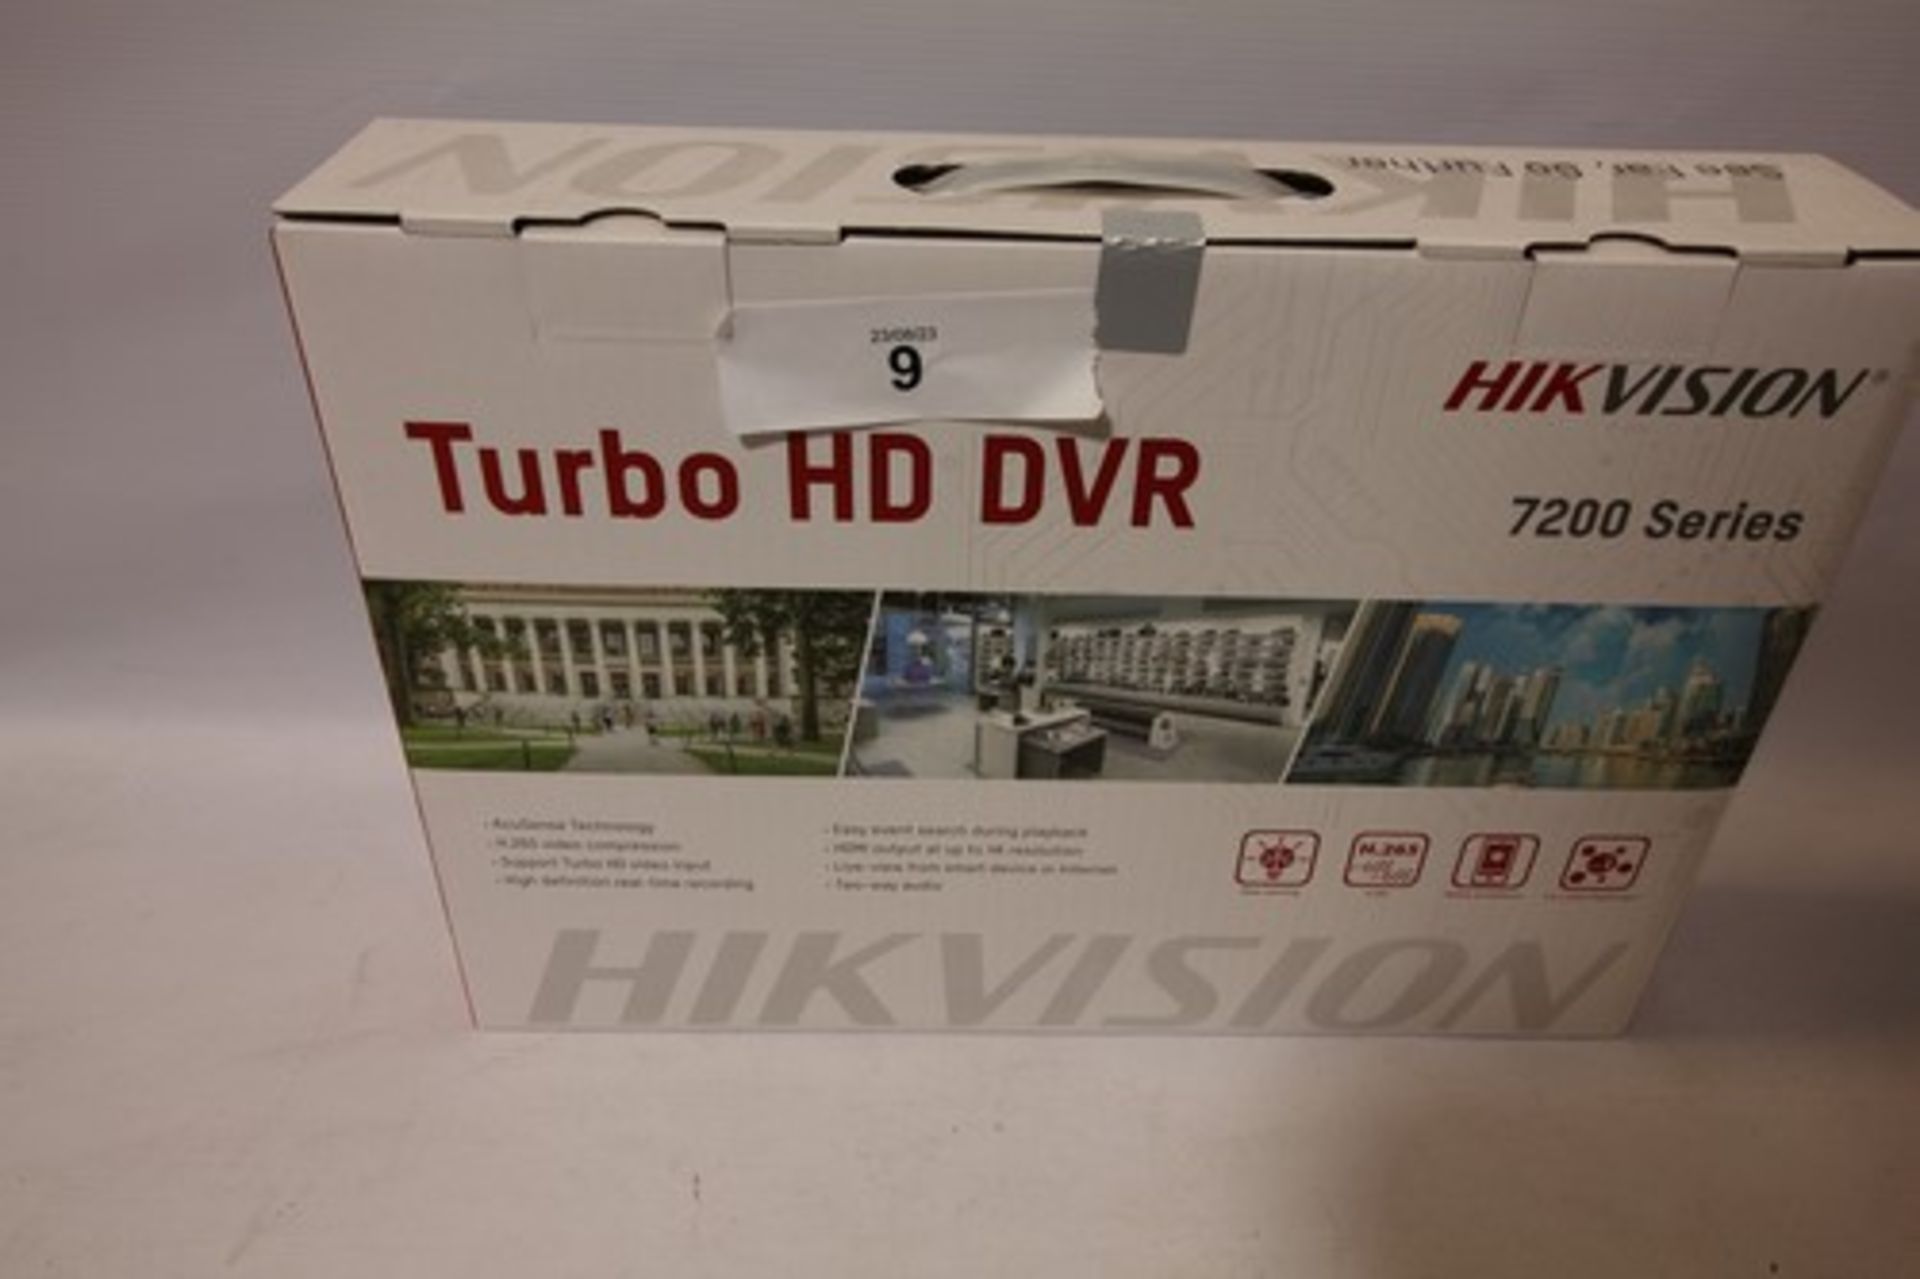 1 x Hikvision Turbo HD DVR 7200 series digital CCTV recorder, Model: ID5-7204HQHI-K1/25 - Sealed new